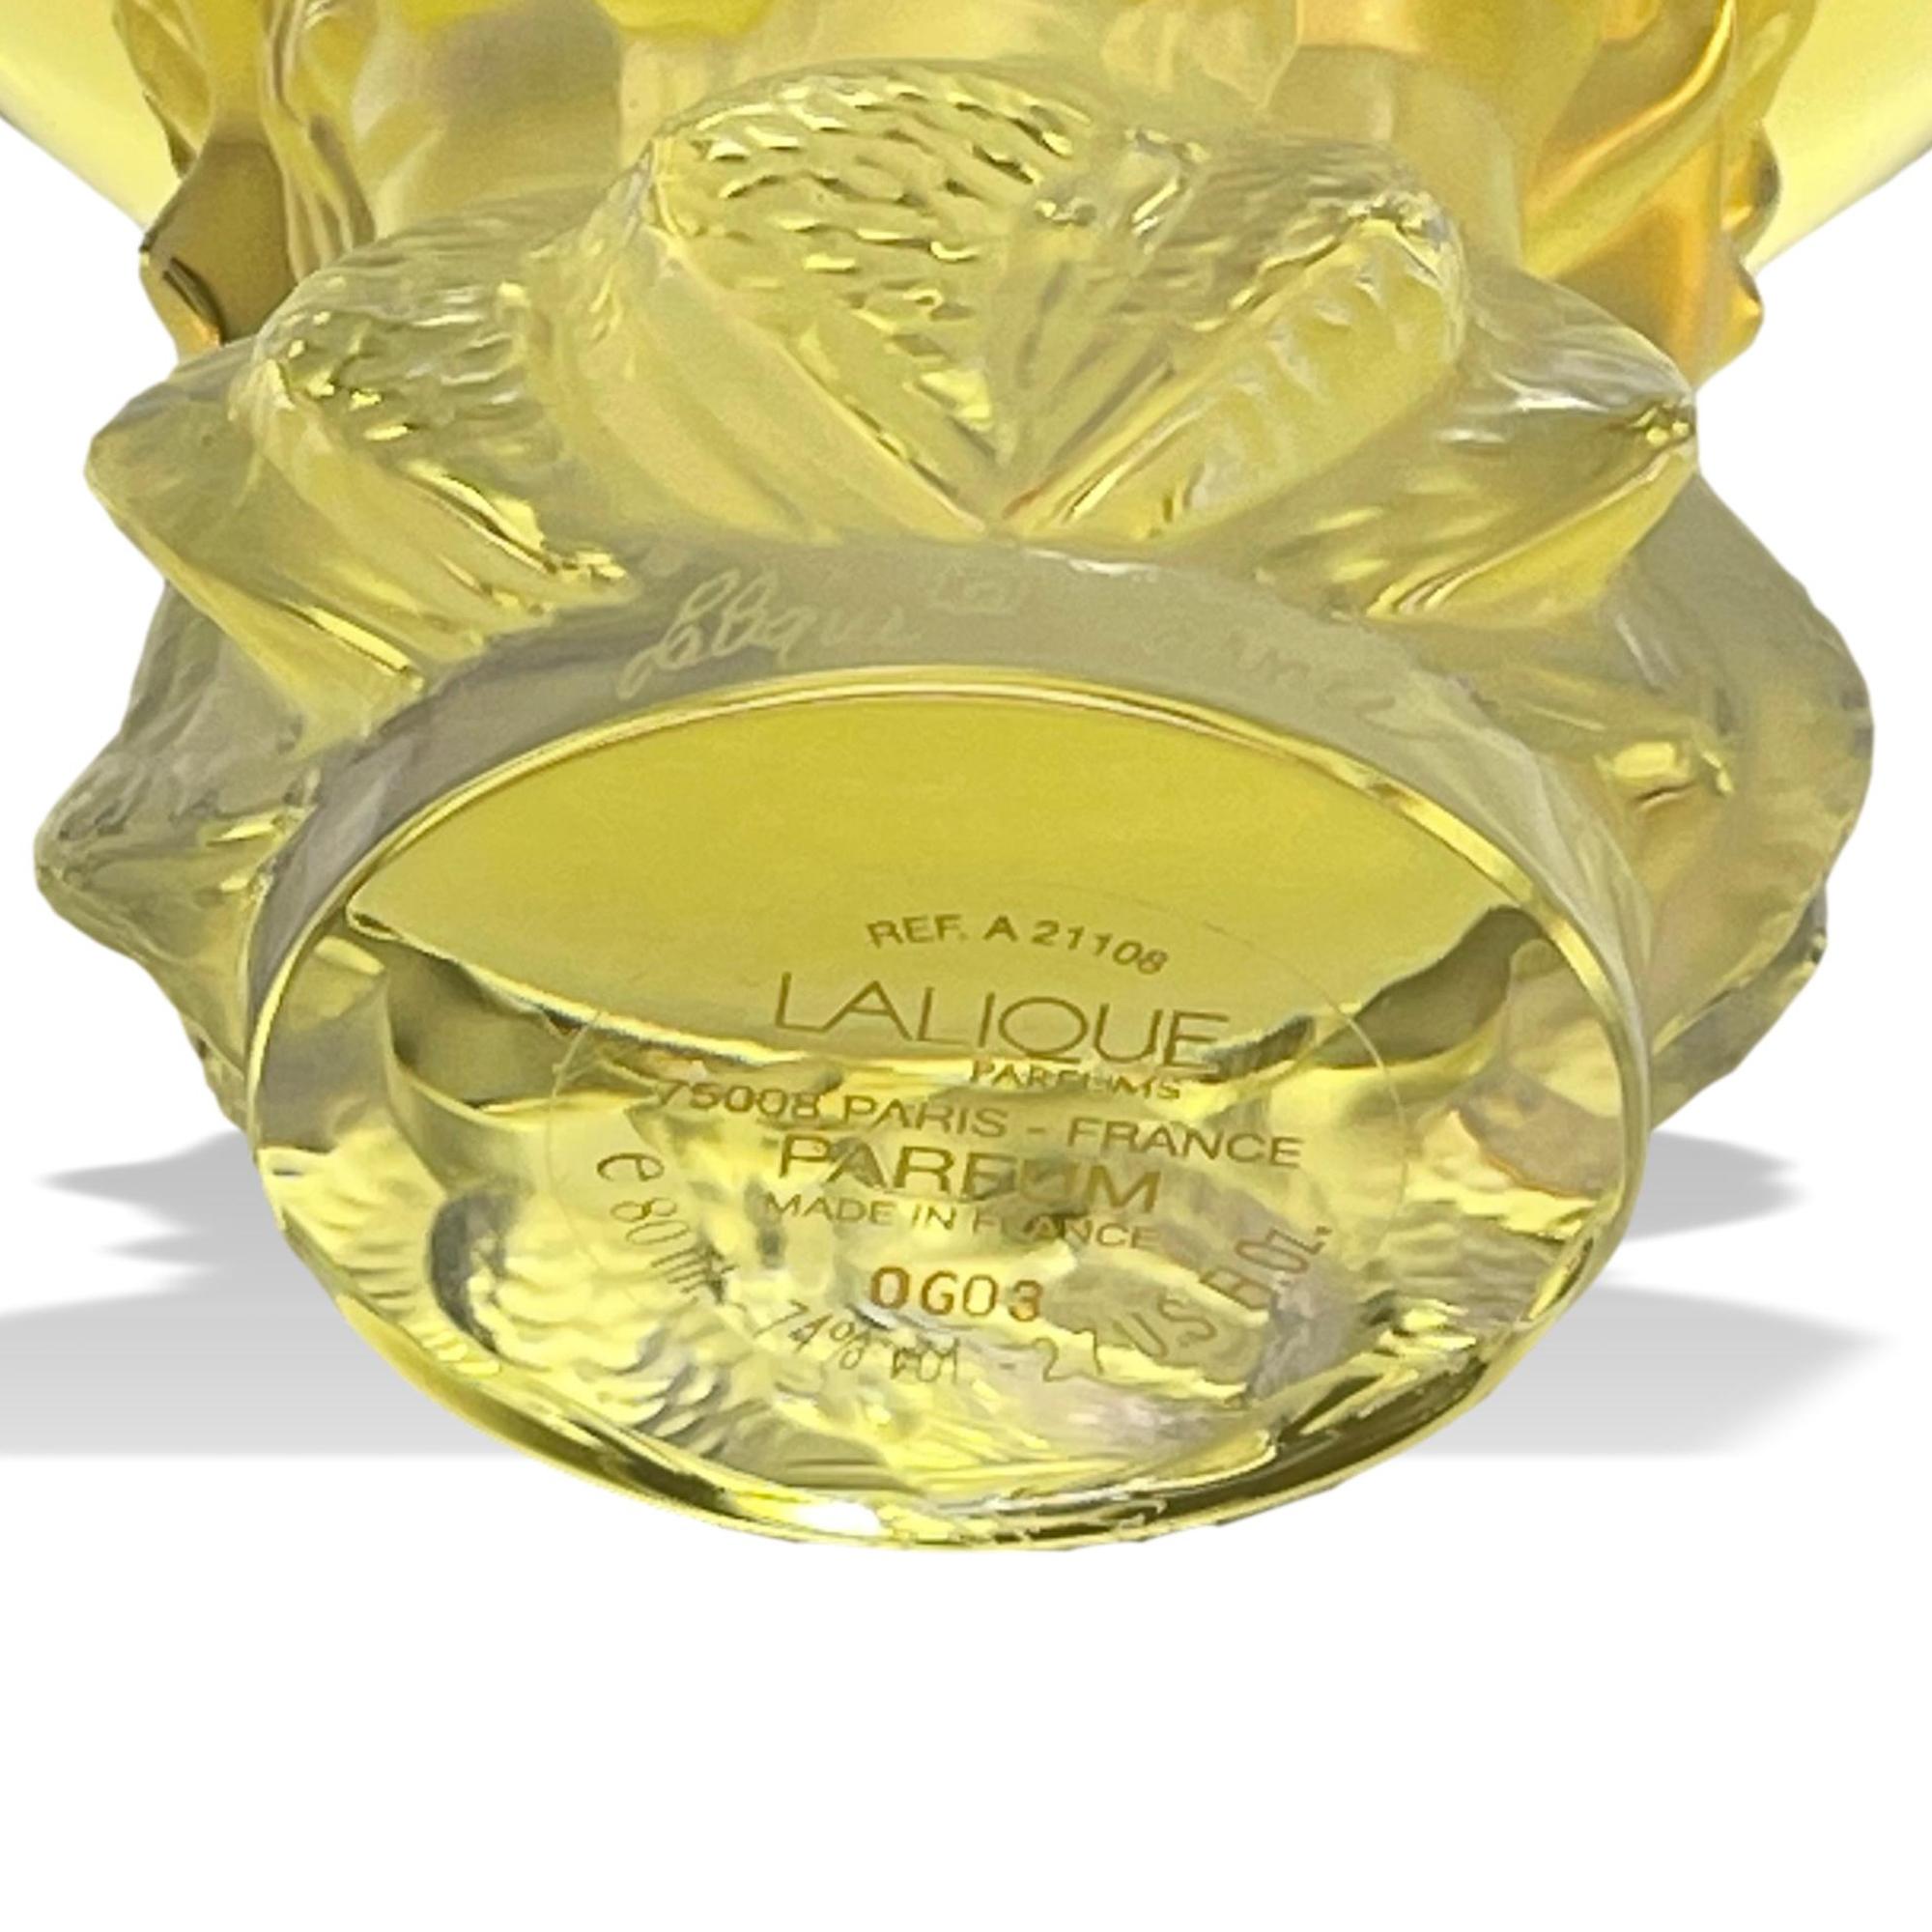 French Limited Edition Perfume Bottle entitled  